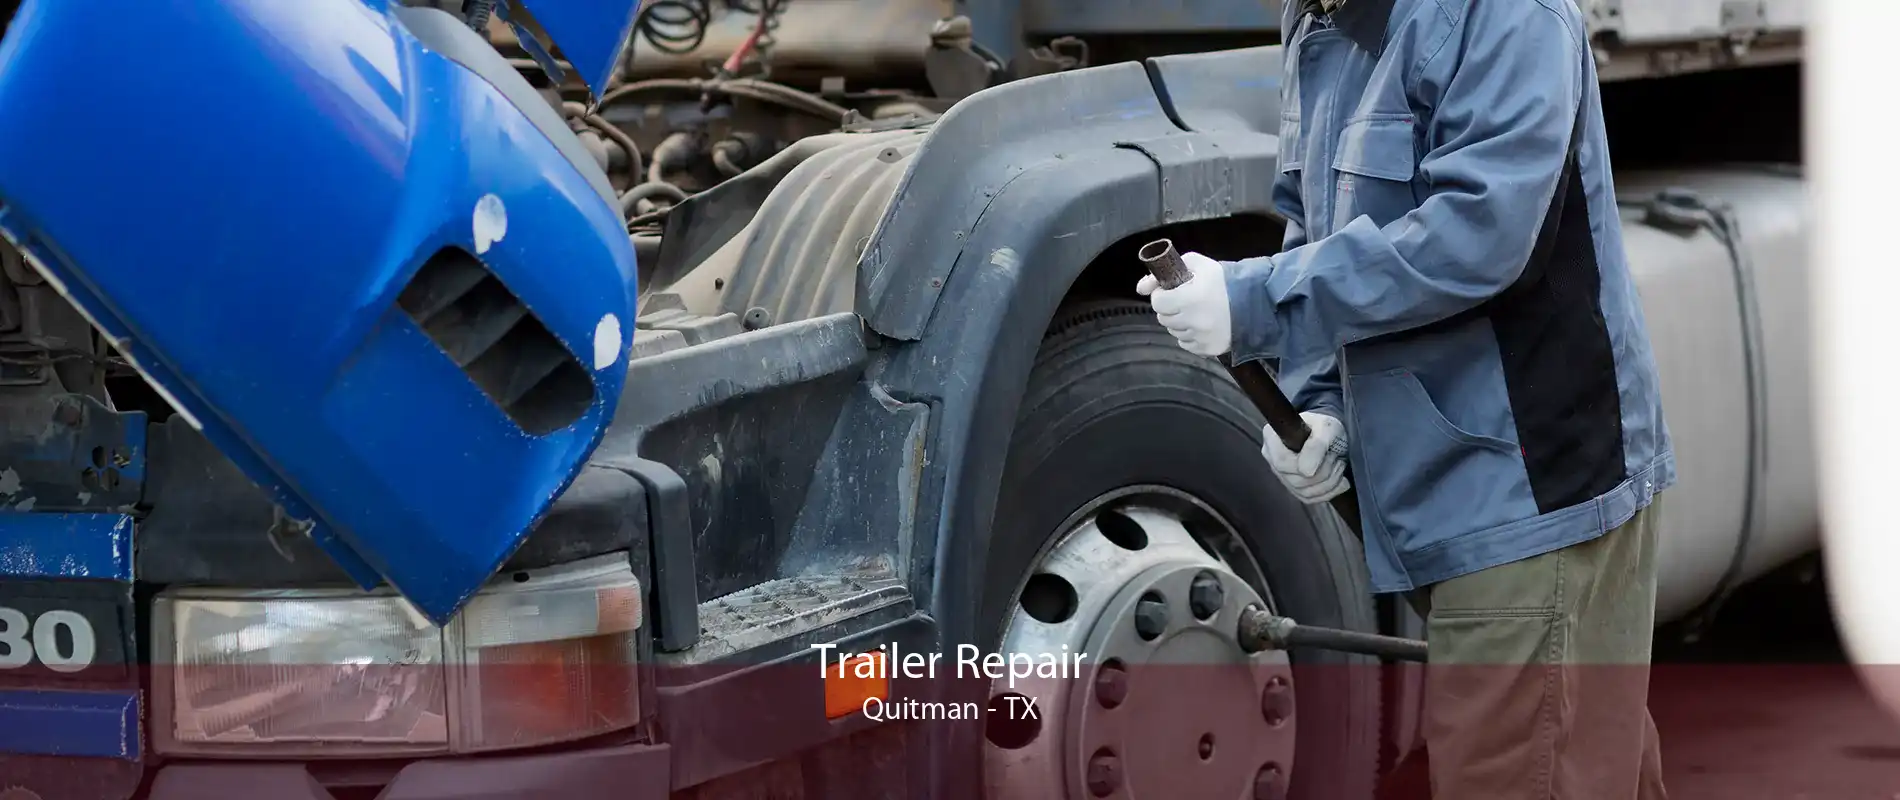 Trailer Repair Quitman - TX